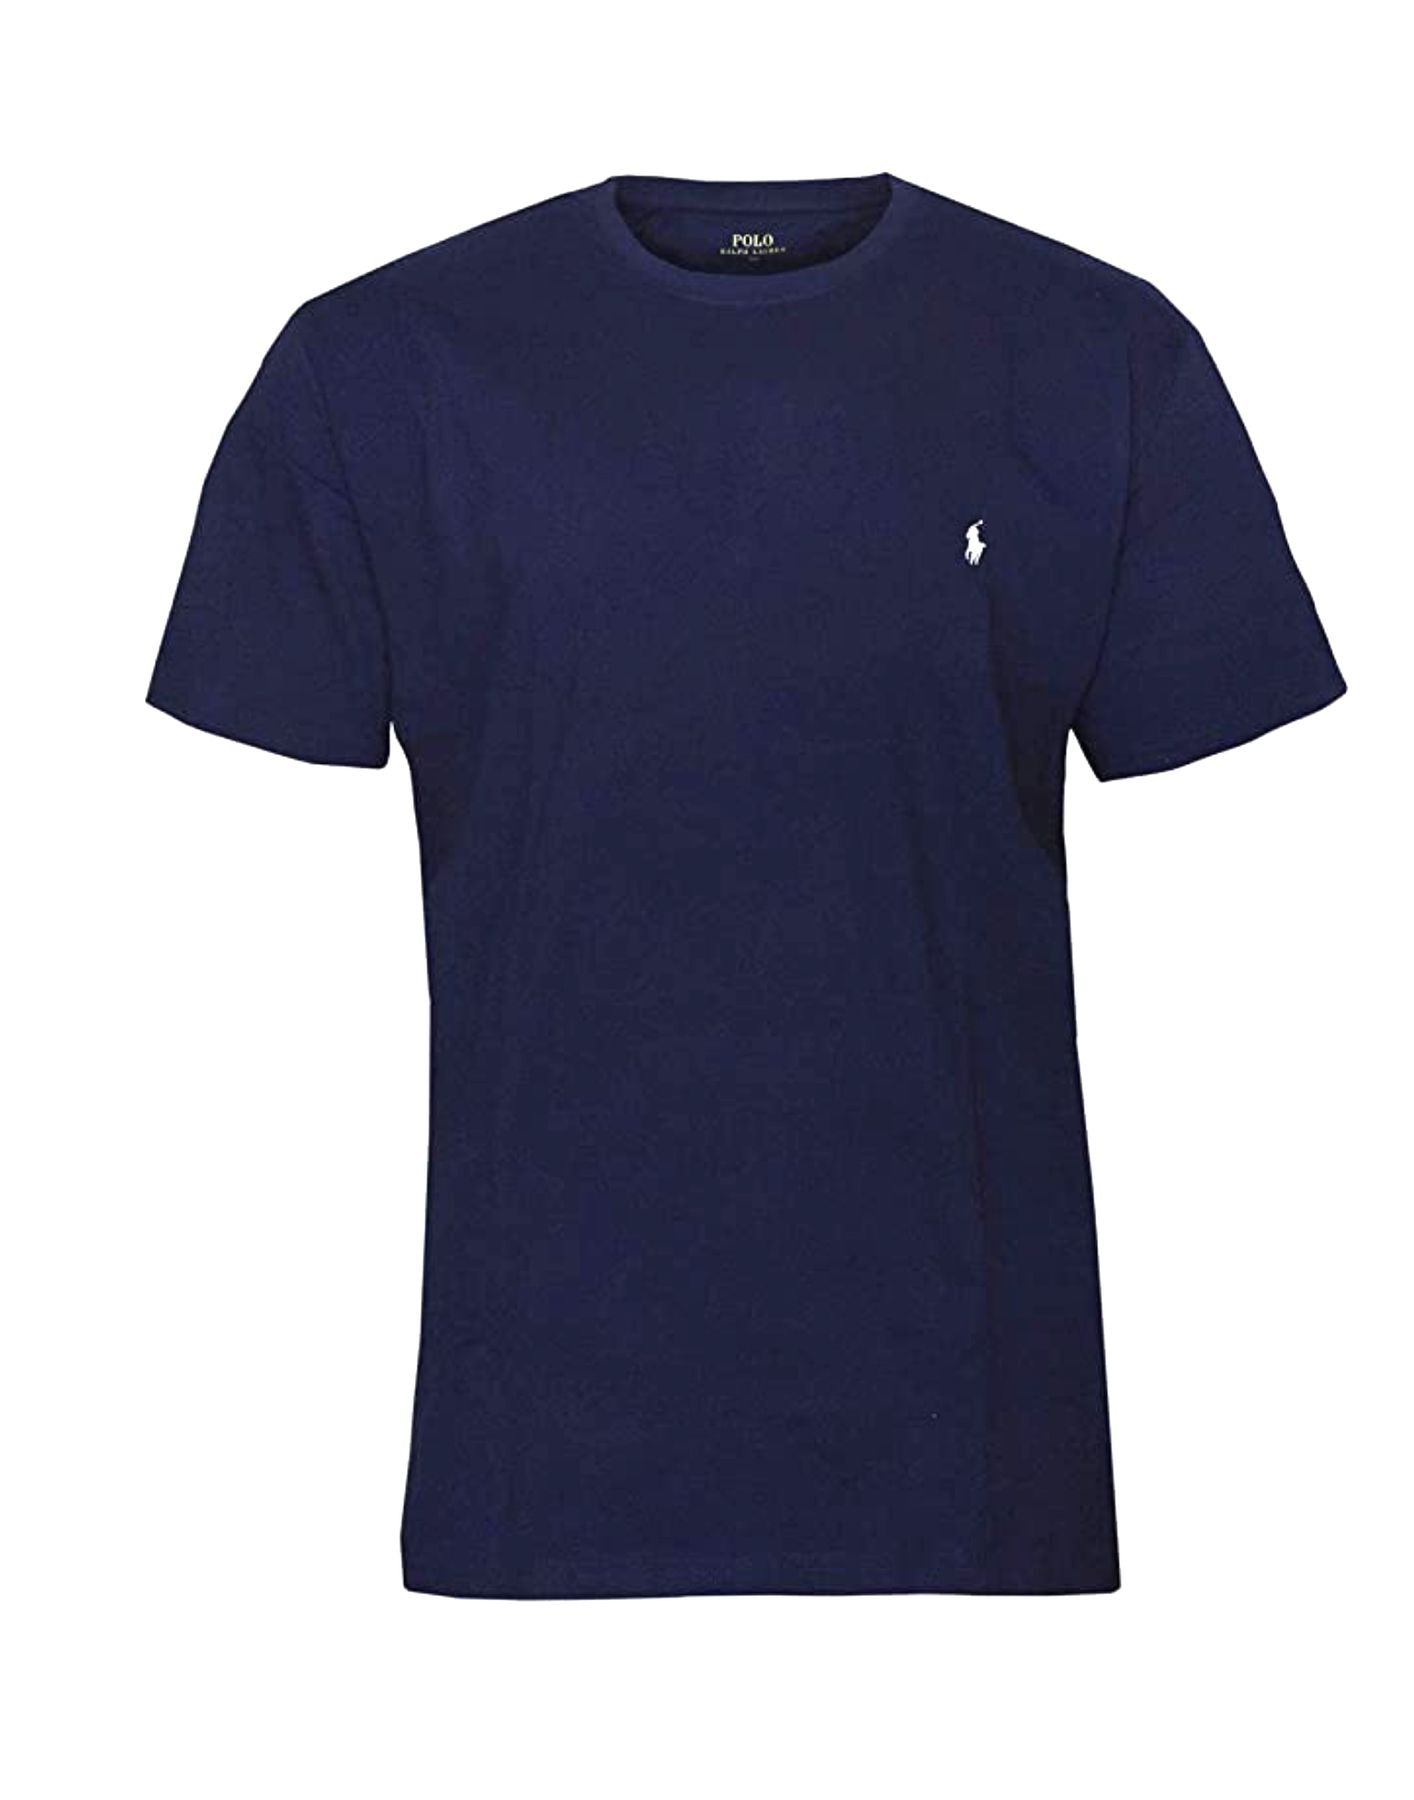 T-shirt uomo 714844756002 NAVY Polo Ralph Lauren